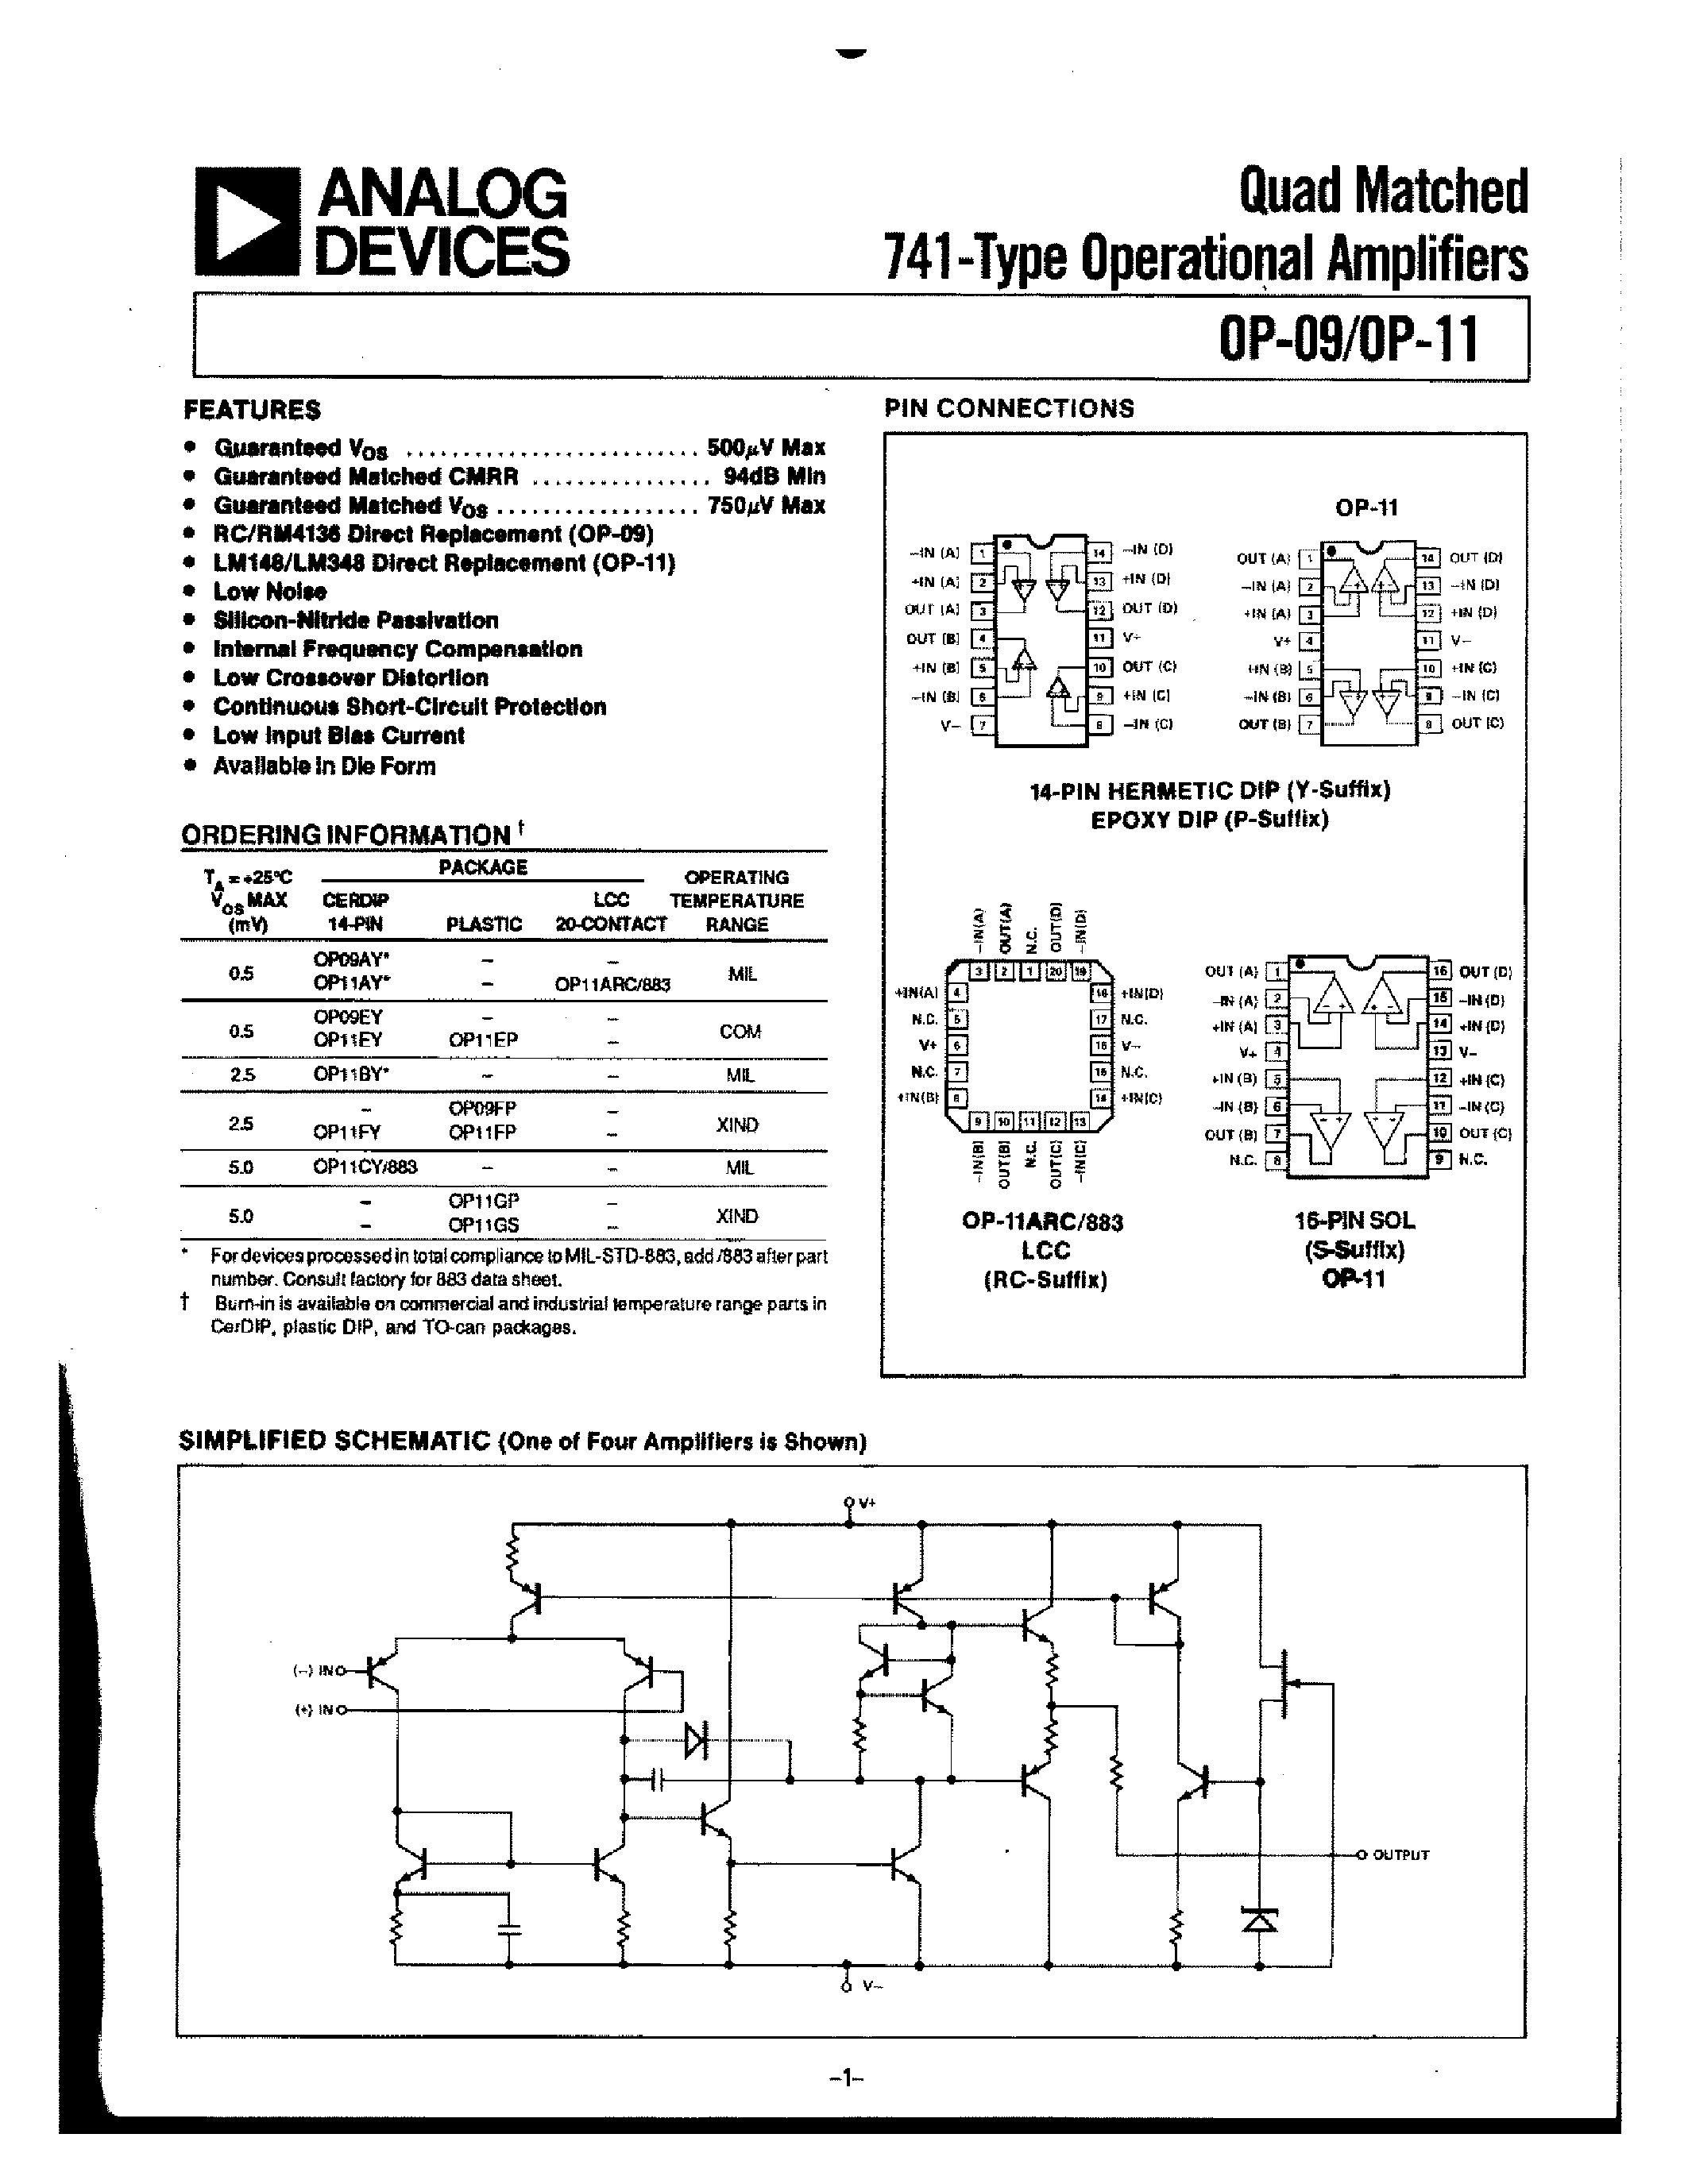 Даташит OP-09 - Quad Matched 741-Type Operational Amplifiers страница 1